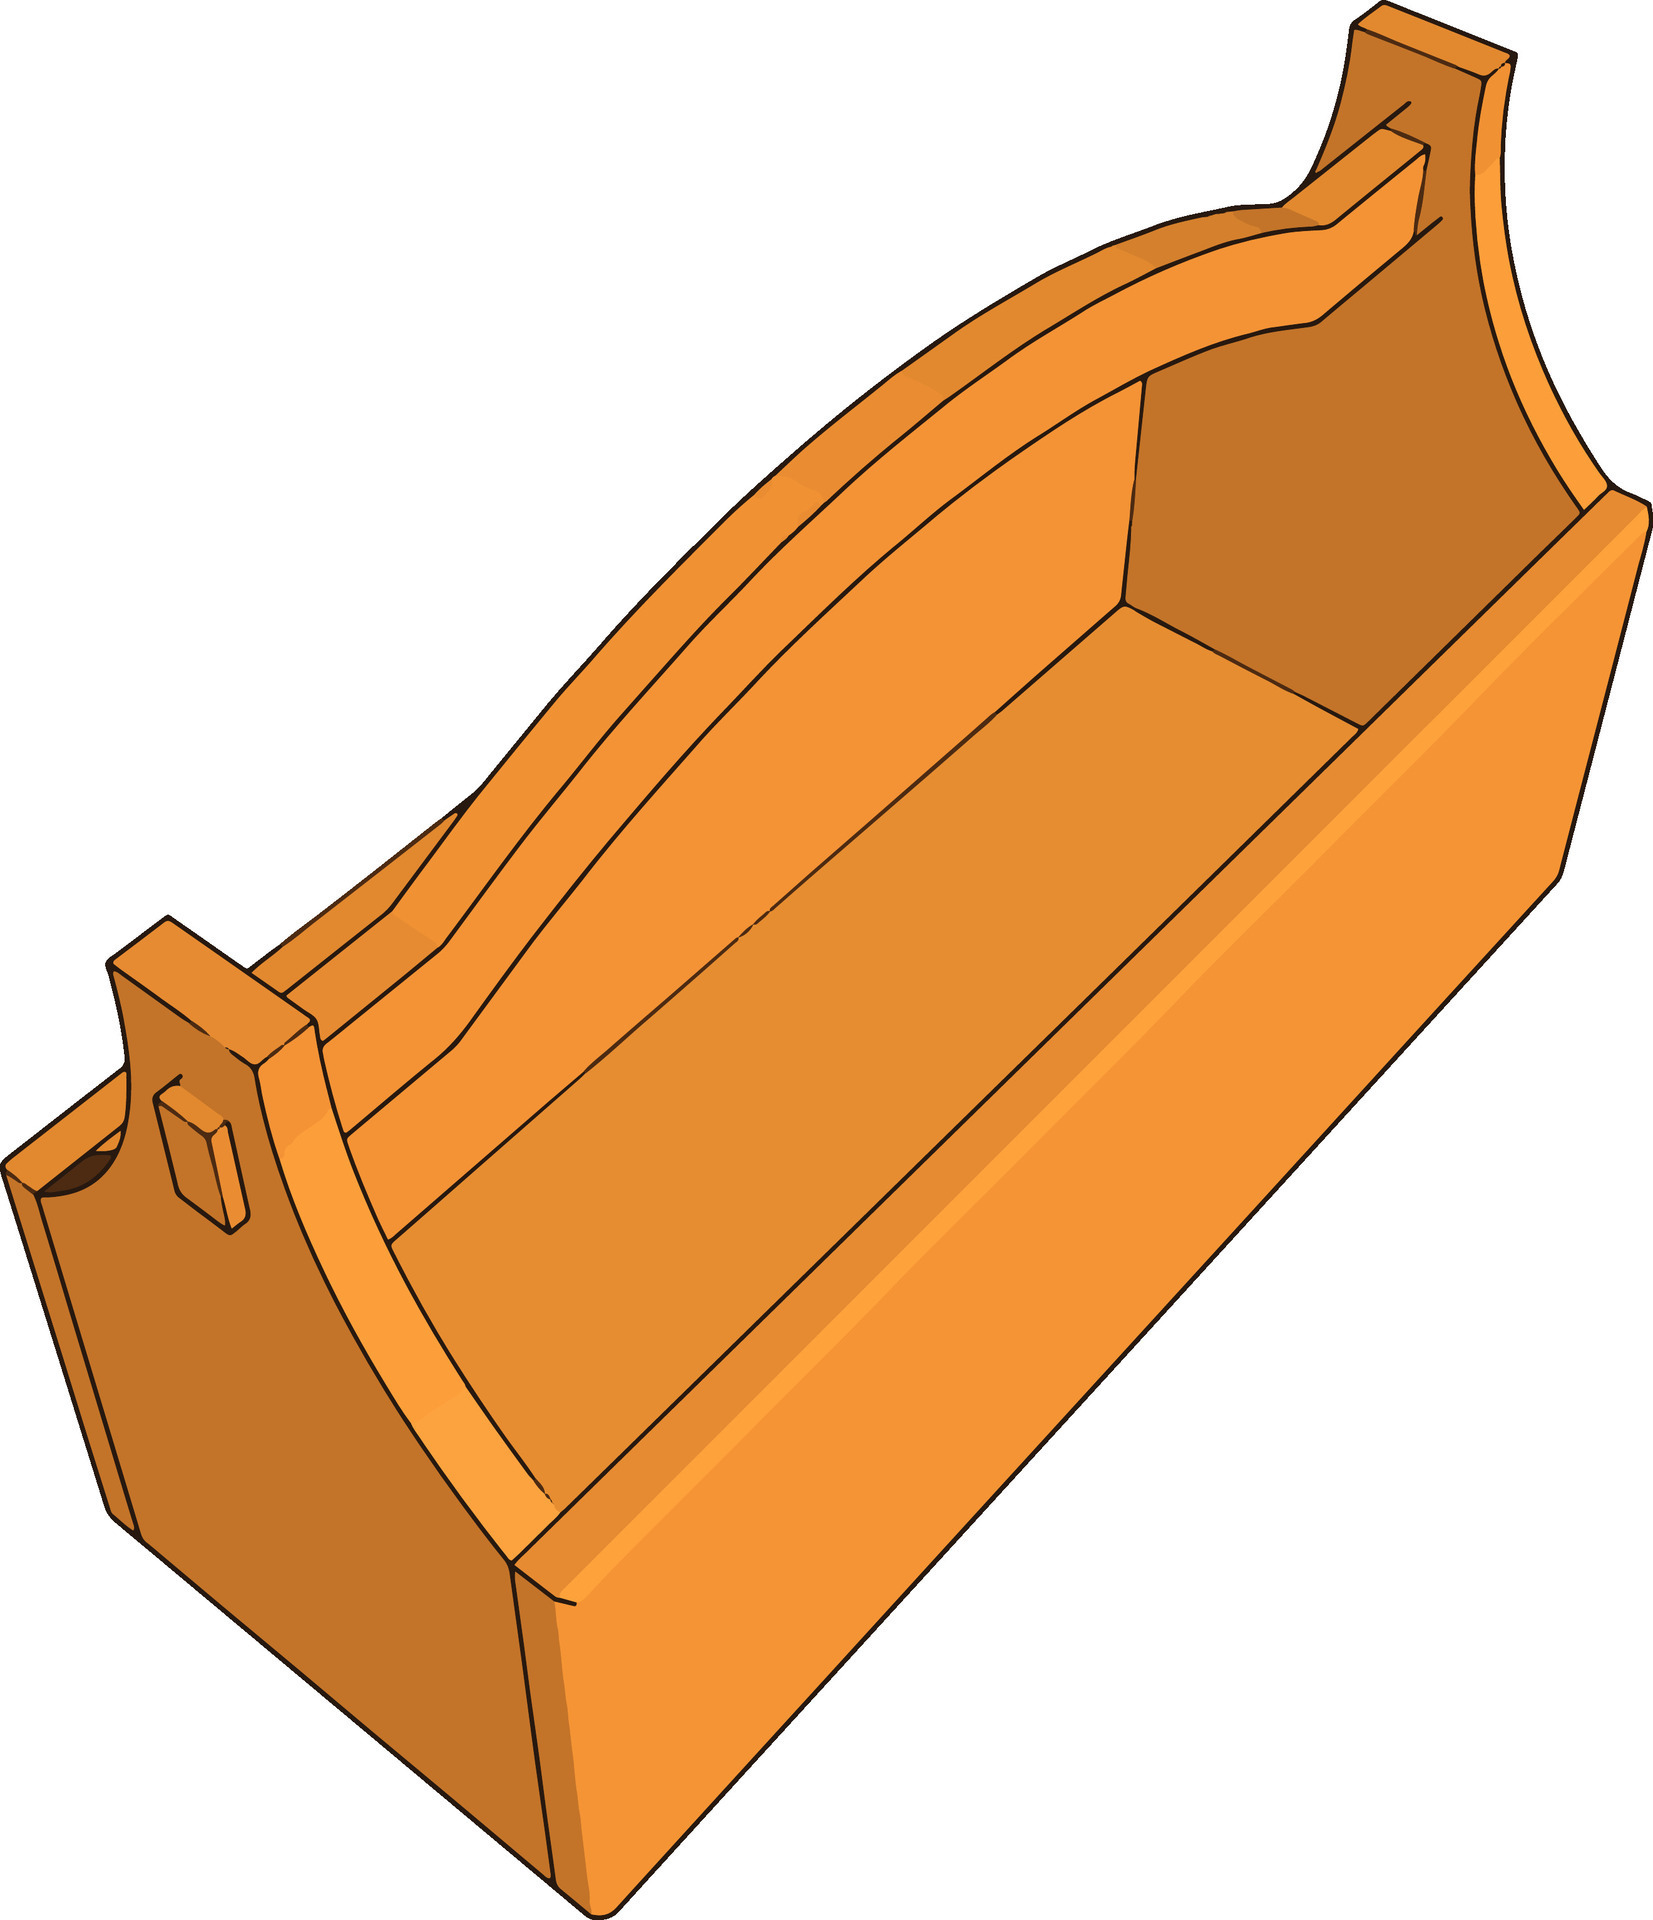 Orange tool box, illustration, vector on white background